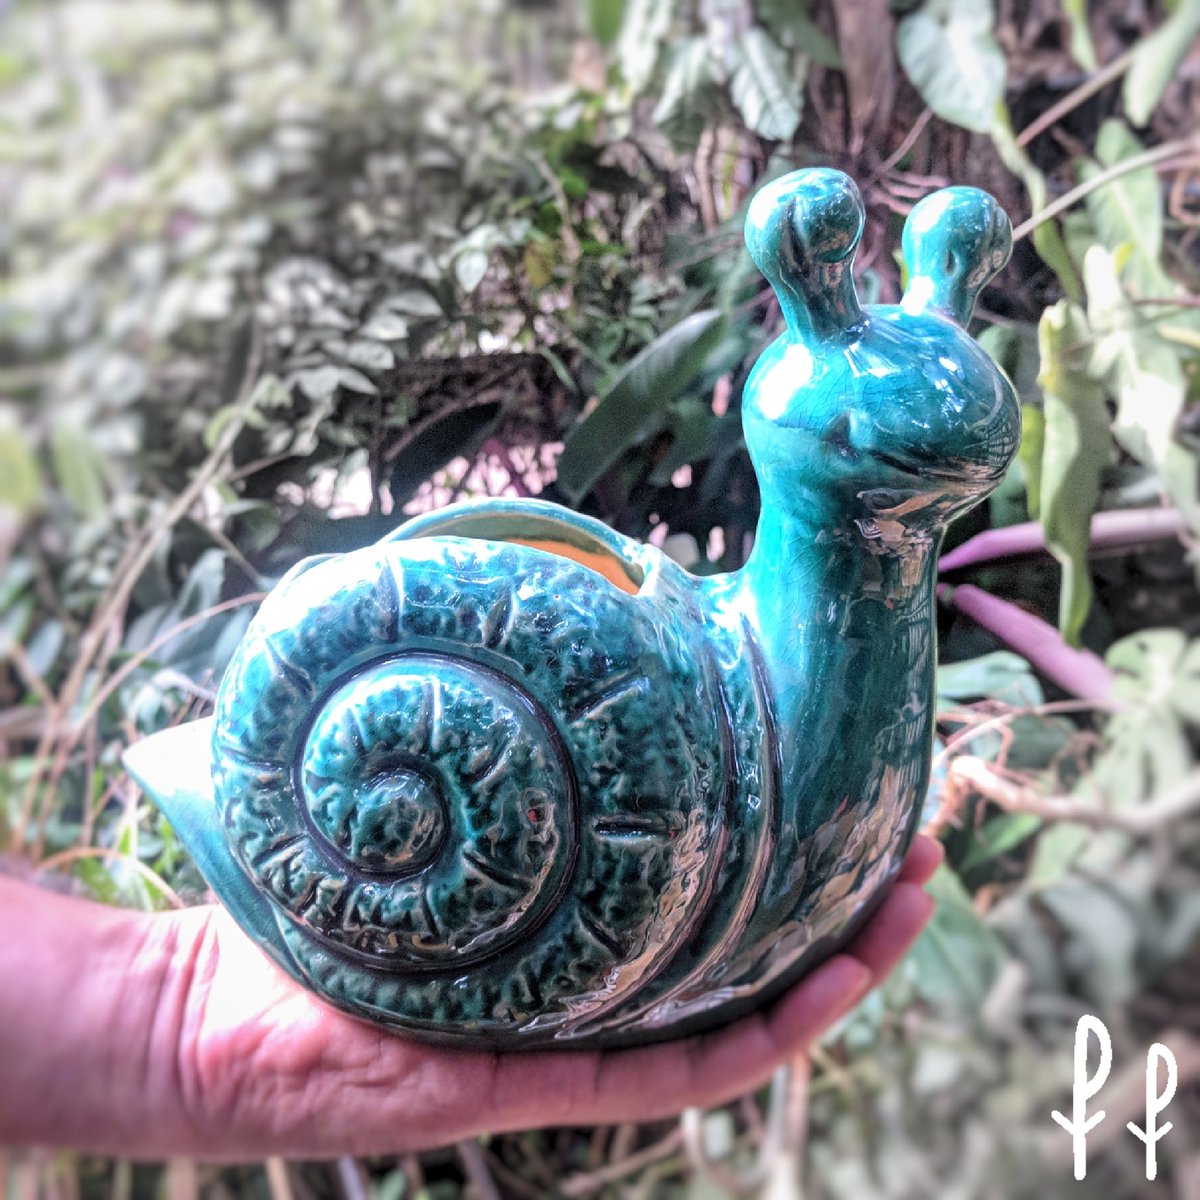 #newstockalert! Some cool new #pots & #planters. DM or WhatsApp us. We'd be happy to share pics of the whole collection!#ceramicpot #ceramic #gardendecor #homedecor #potsandplants #plantnursery #PlantPeople #mumbai #adorbs #pot #pottery #plantporn #ohsocute #snail #ceramicplanter